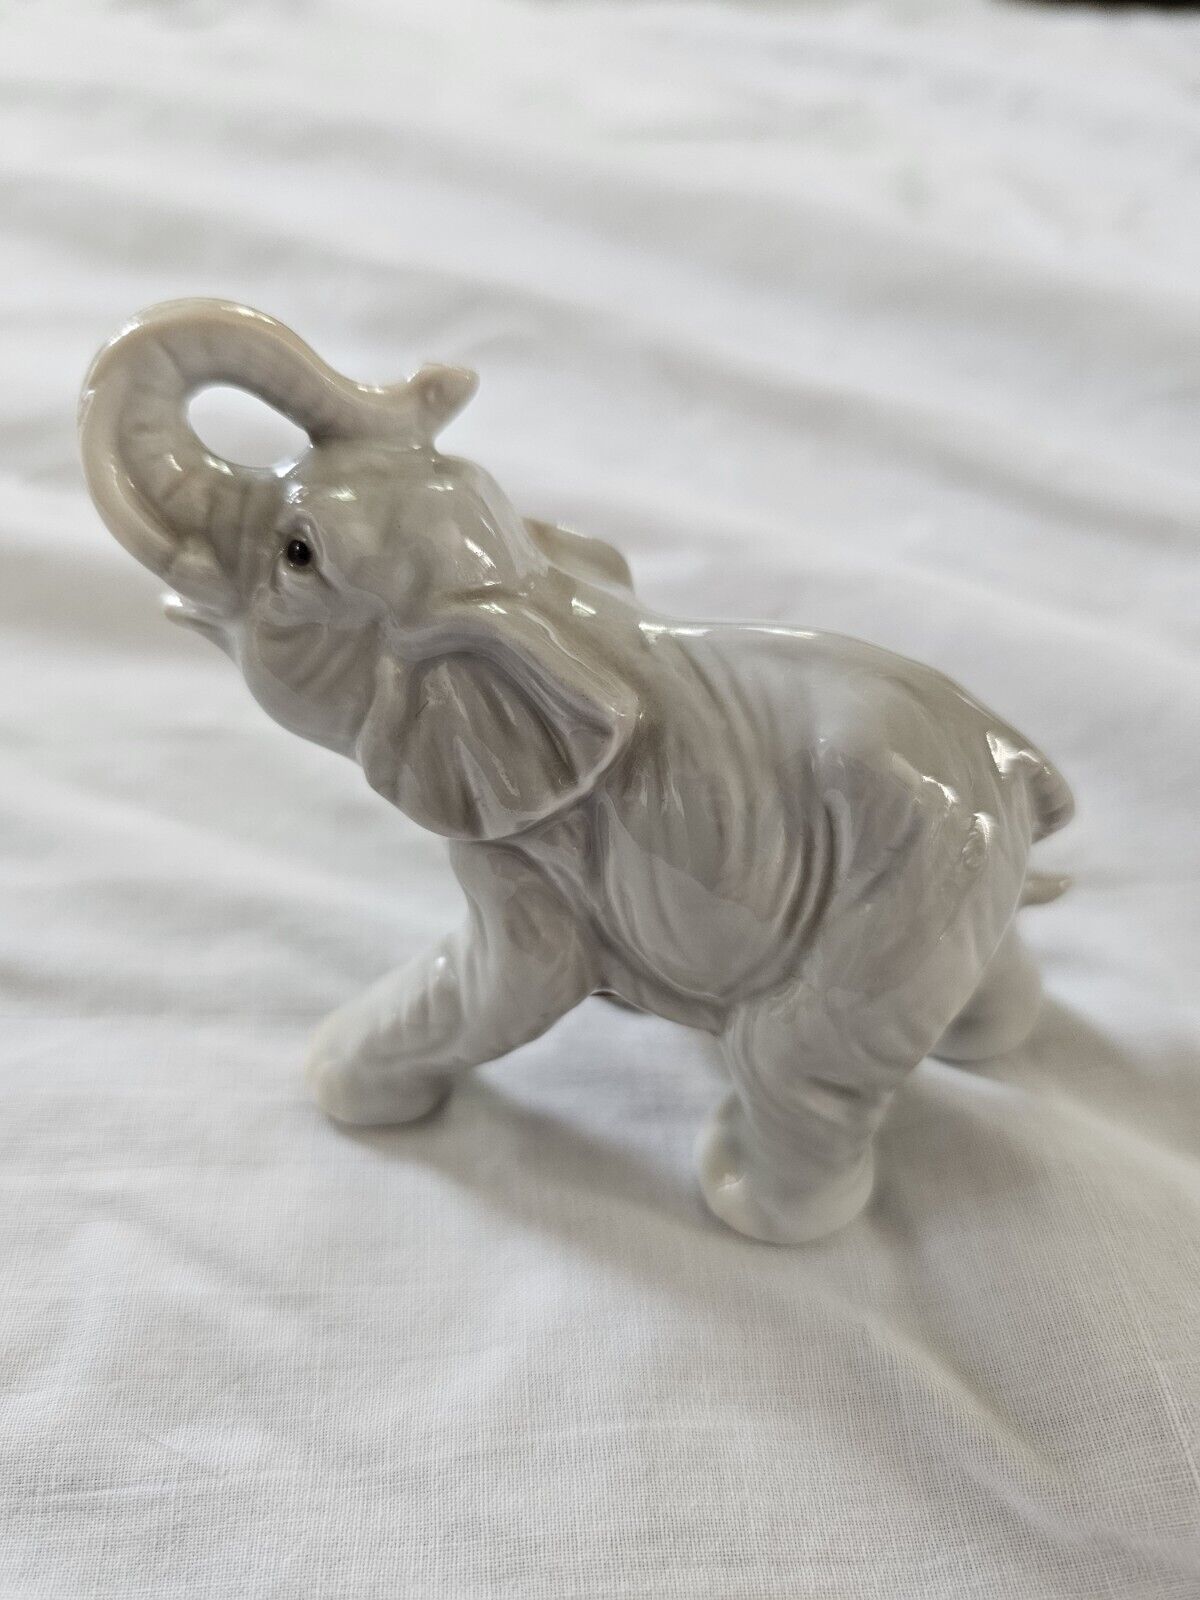 Vintage George Good Miniature Porcelain Trunk Up Elephant Figurine